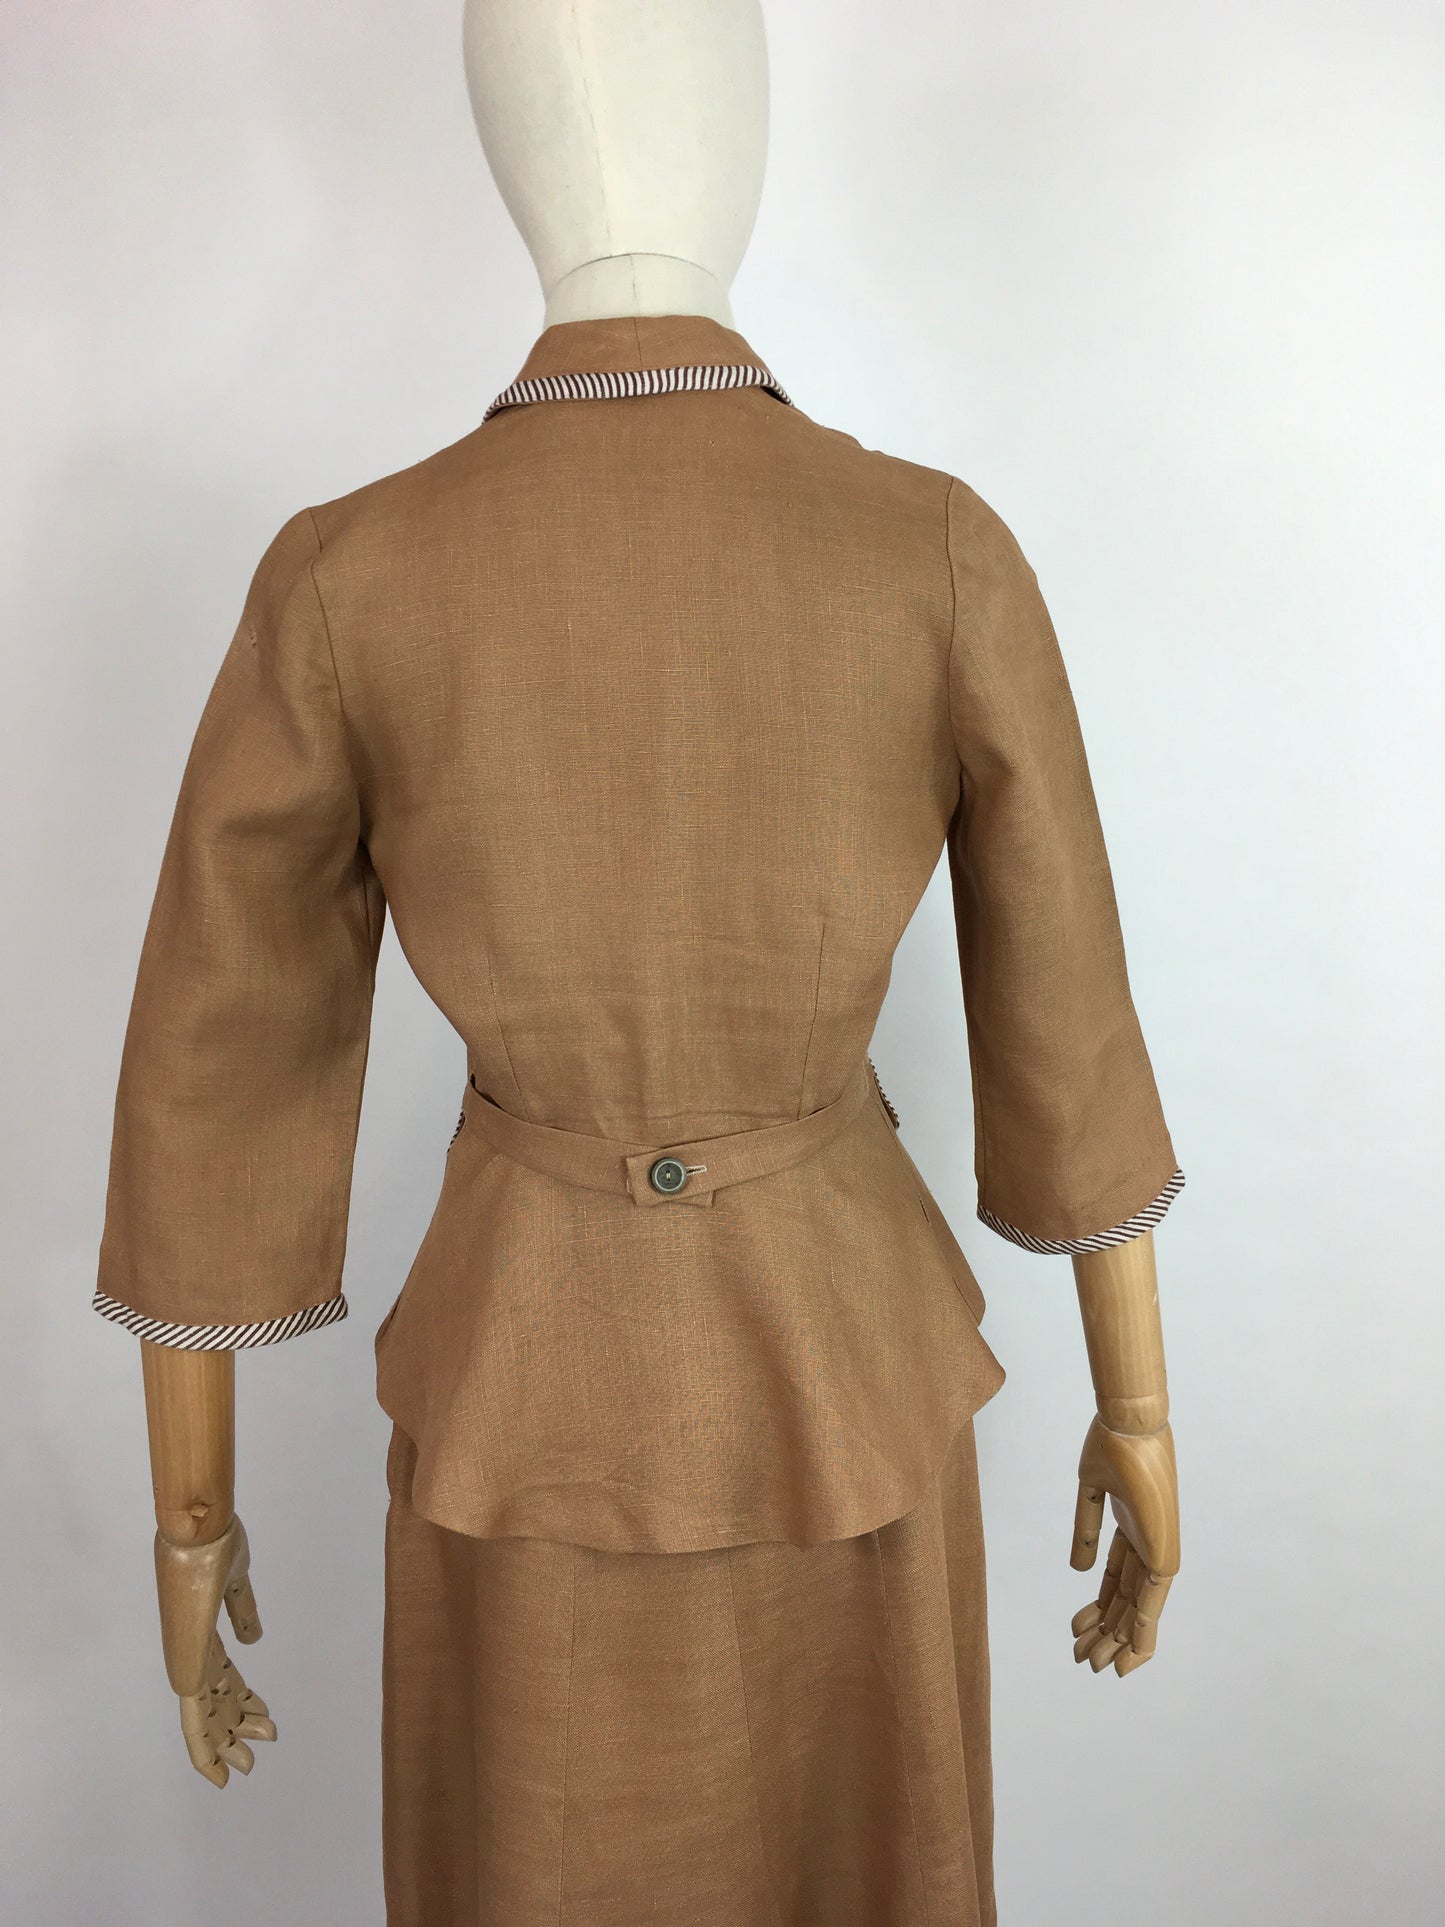 Original 1940’s 2 Piece Suit - In a Beautiful Soft Caramel Linen Colour With Contrast Stripe Detailing